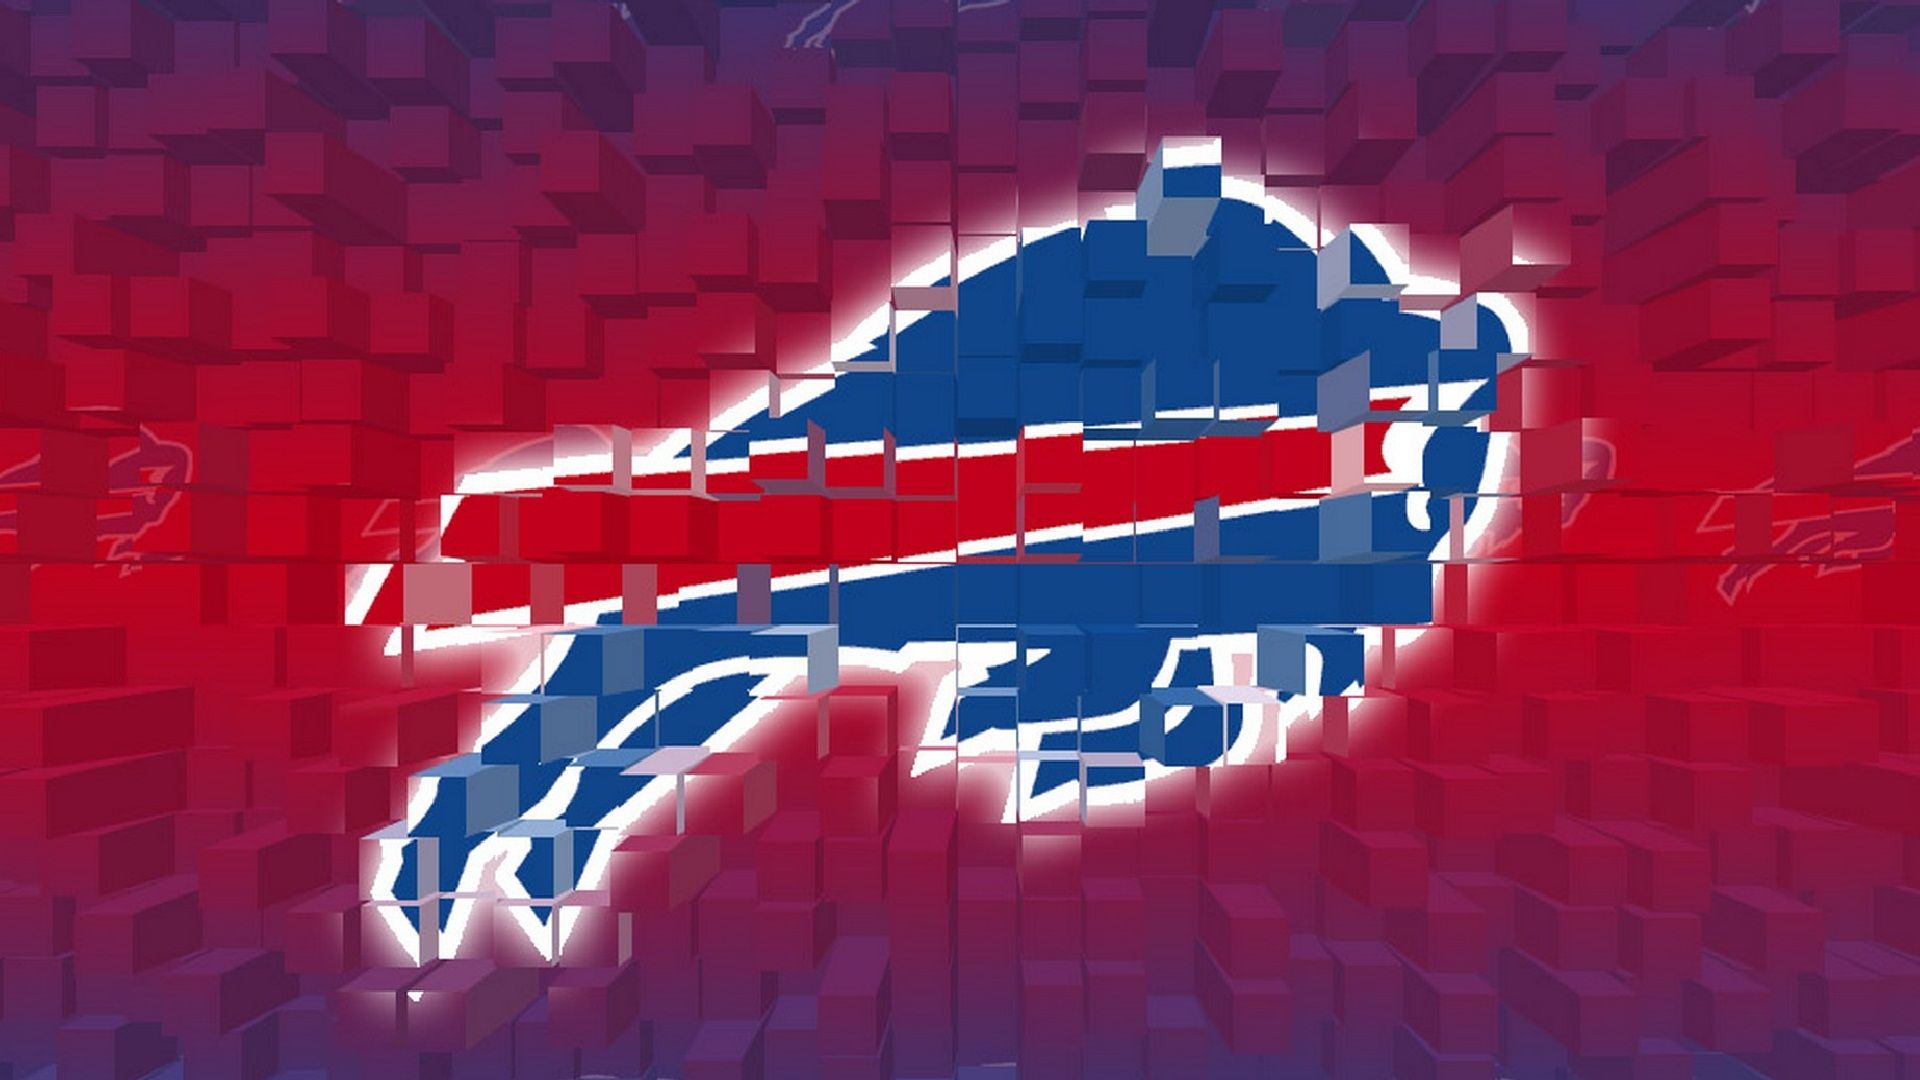 HD Buffalo Bills Background NFL Football Wallpaper